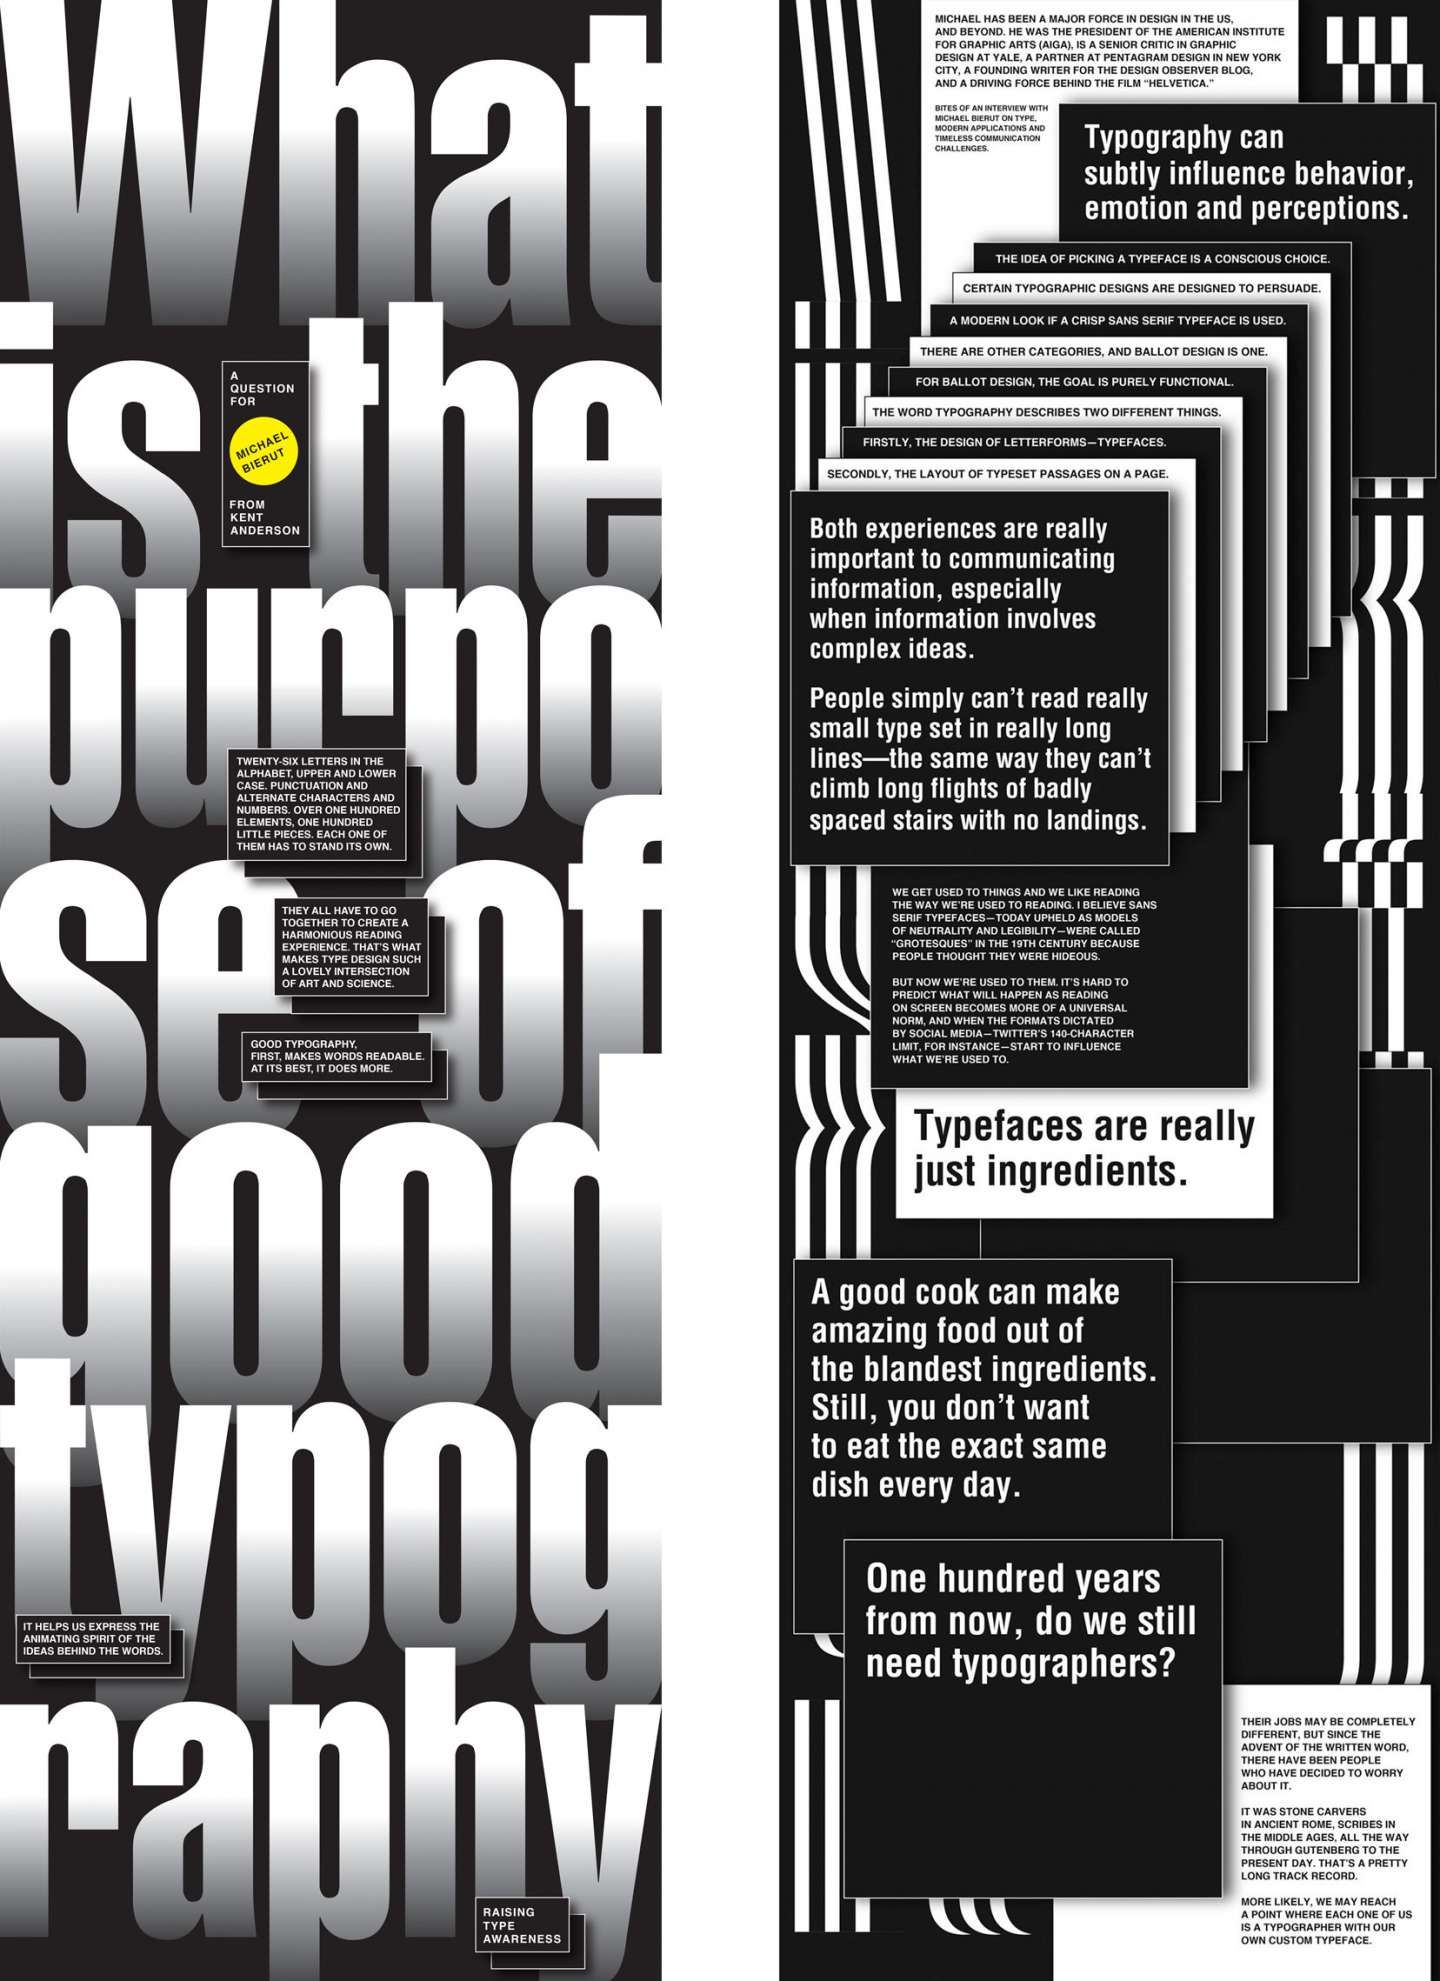 The Purpose Of Good Typography